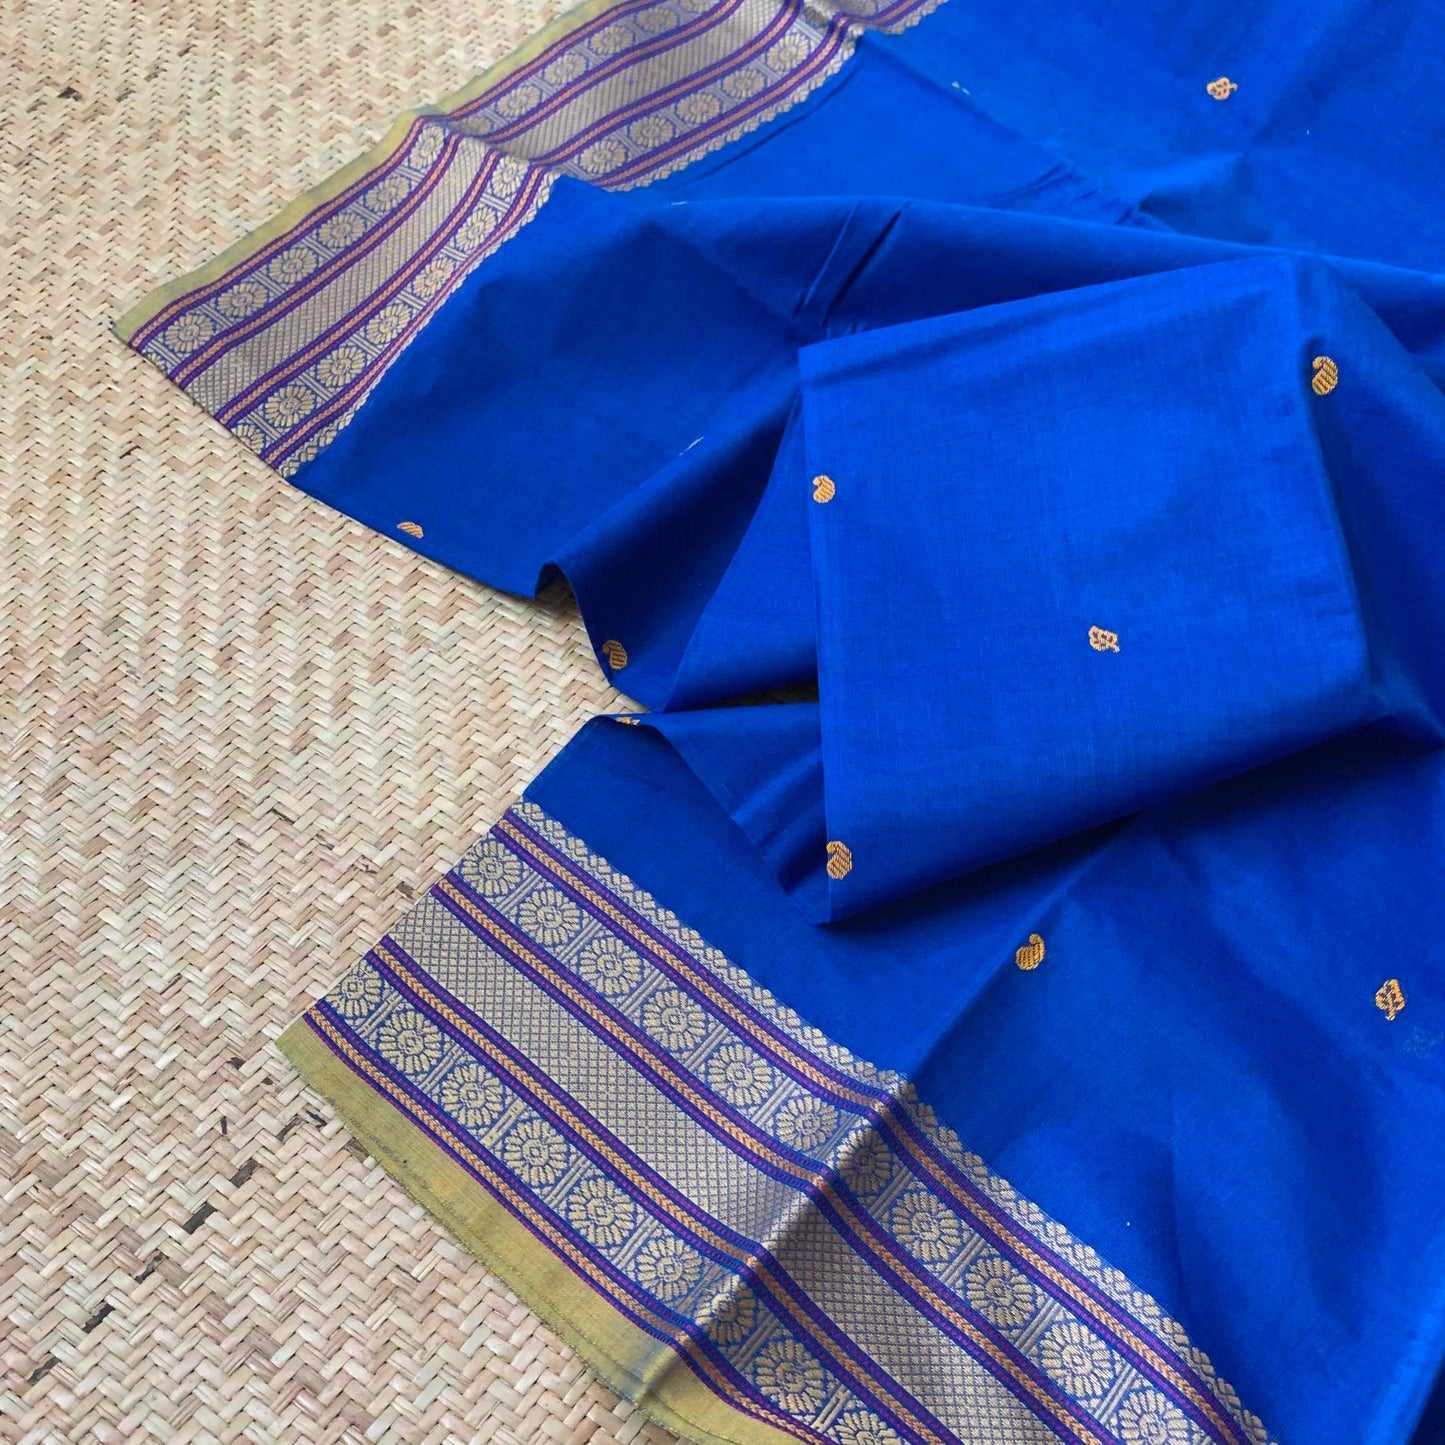 Chettinad Cotton Saree, Blue Saree with Rudraksha Thread Border